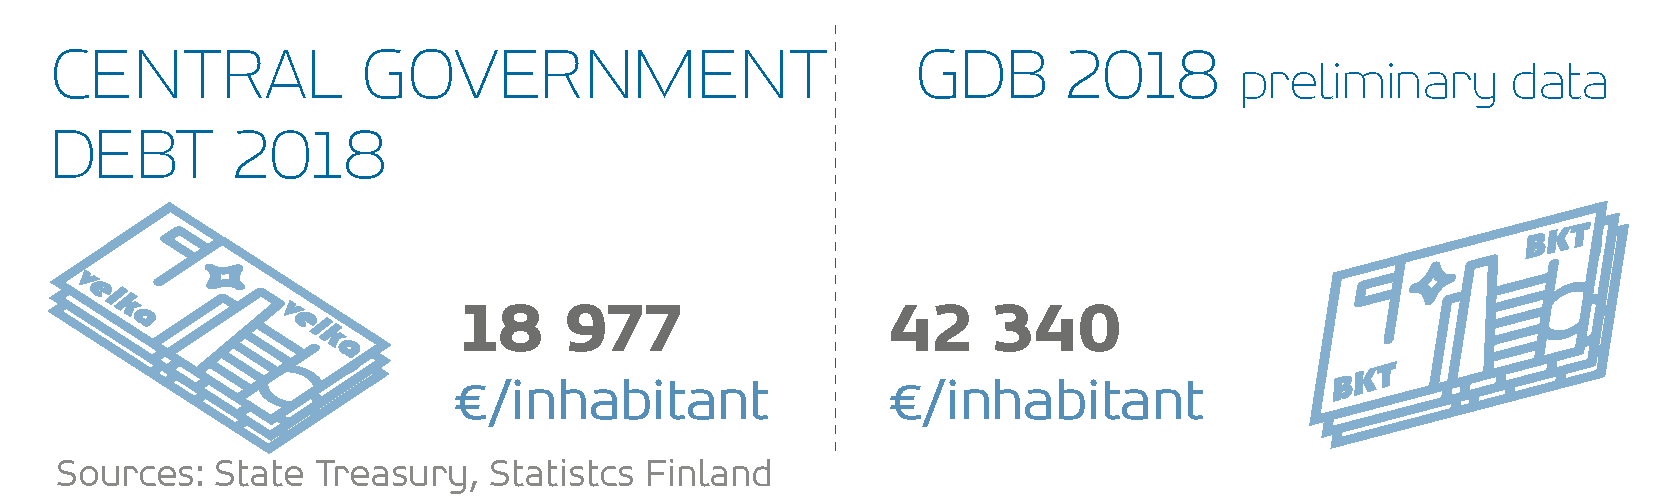 Central government debt 2018: 18,977 euro per inhabitant. GDB 2018 (preliminary data): 42,340 euro per inhabitant. Sources: State Treasury, Statistics Finland. 